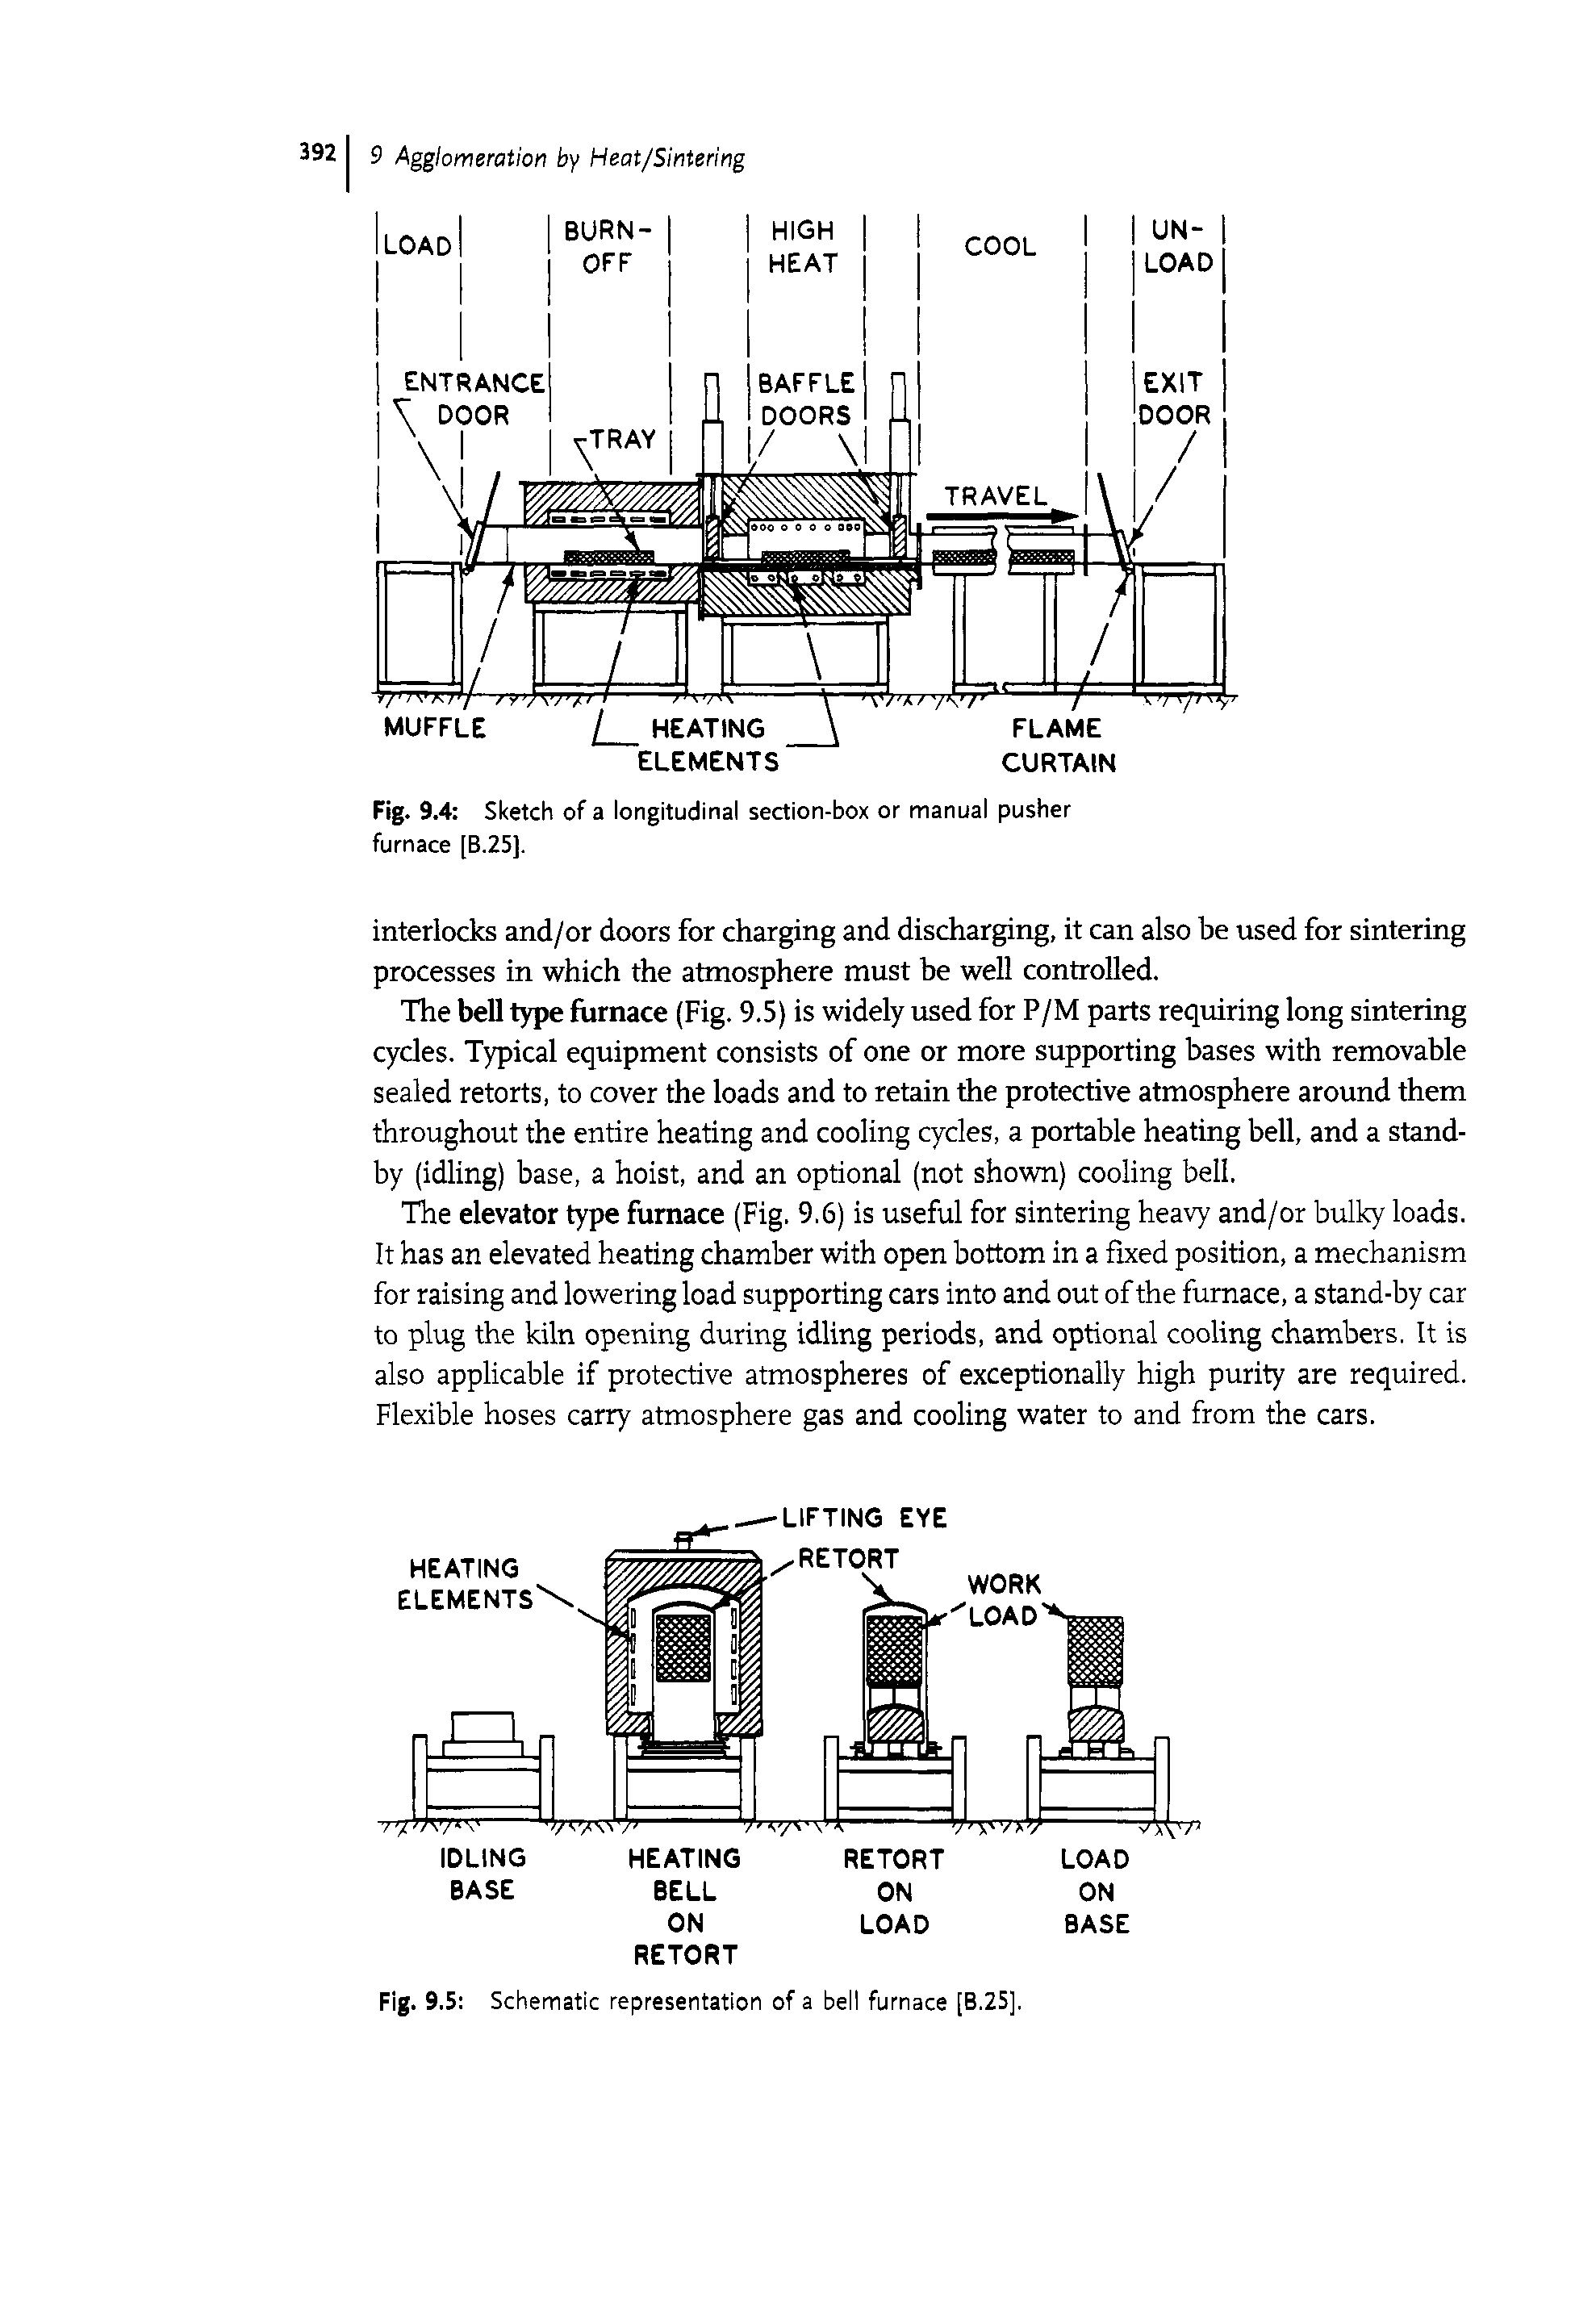 Fig. 9.4 Sketch of a longitudinal section-box or manual pusher furnace [B.25],...